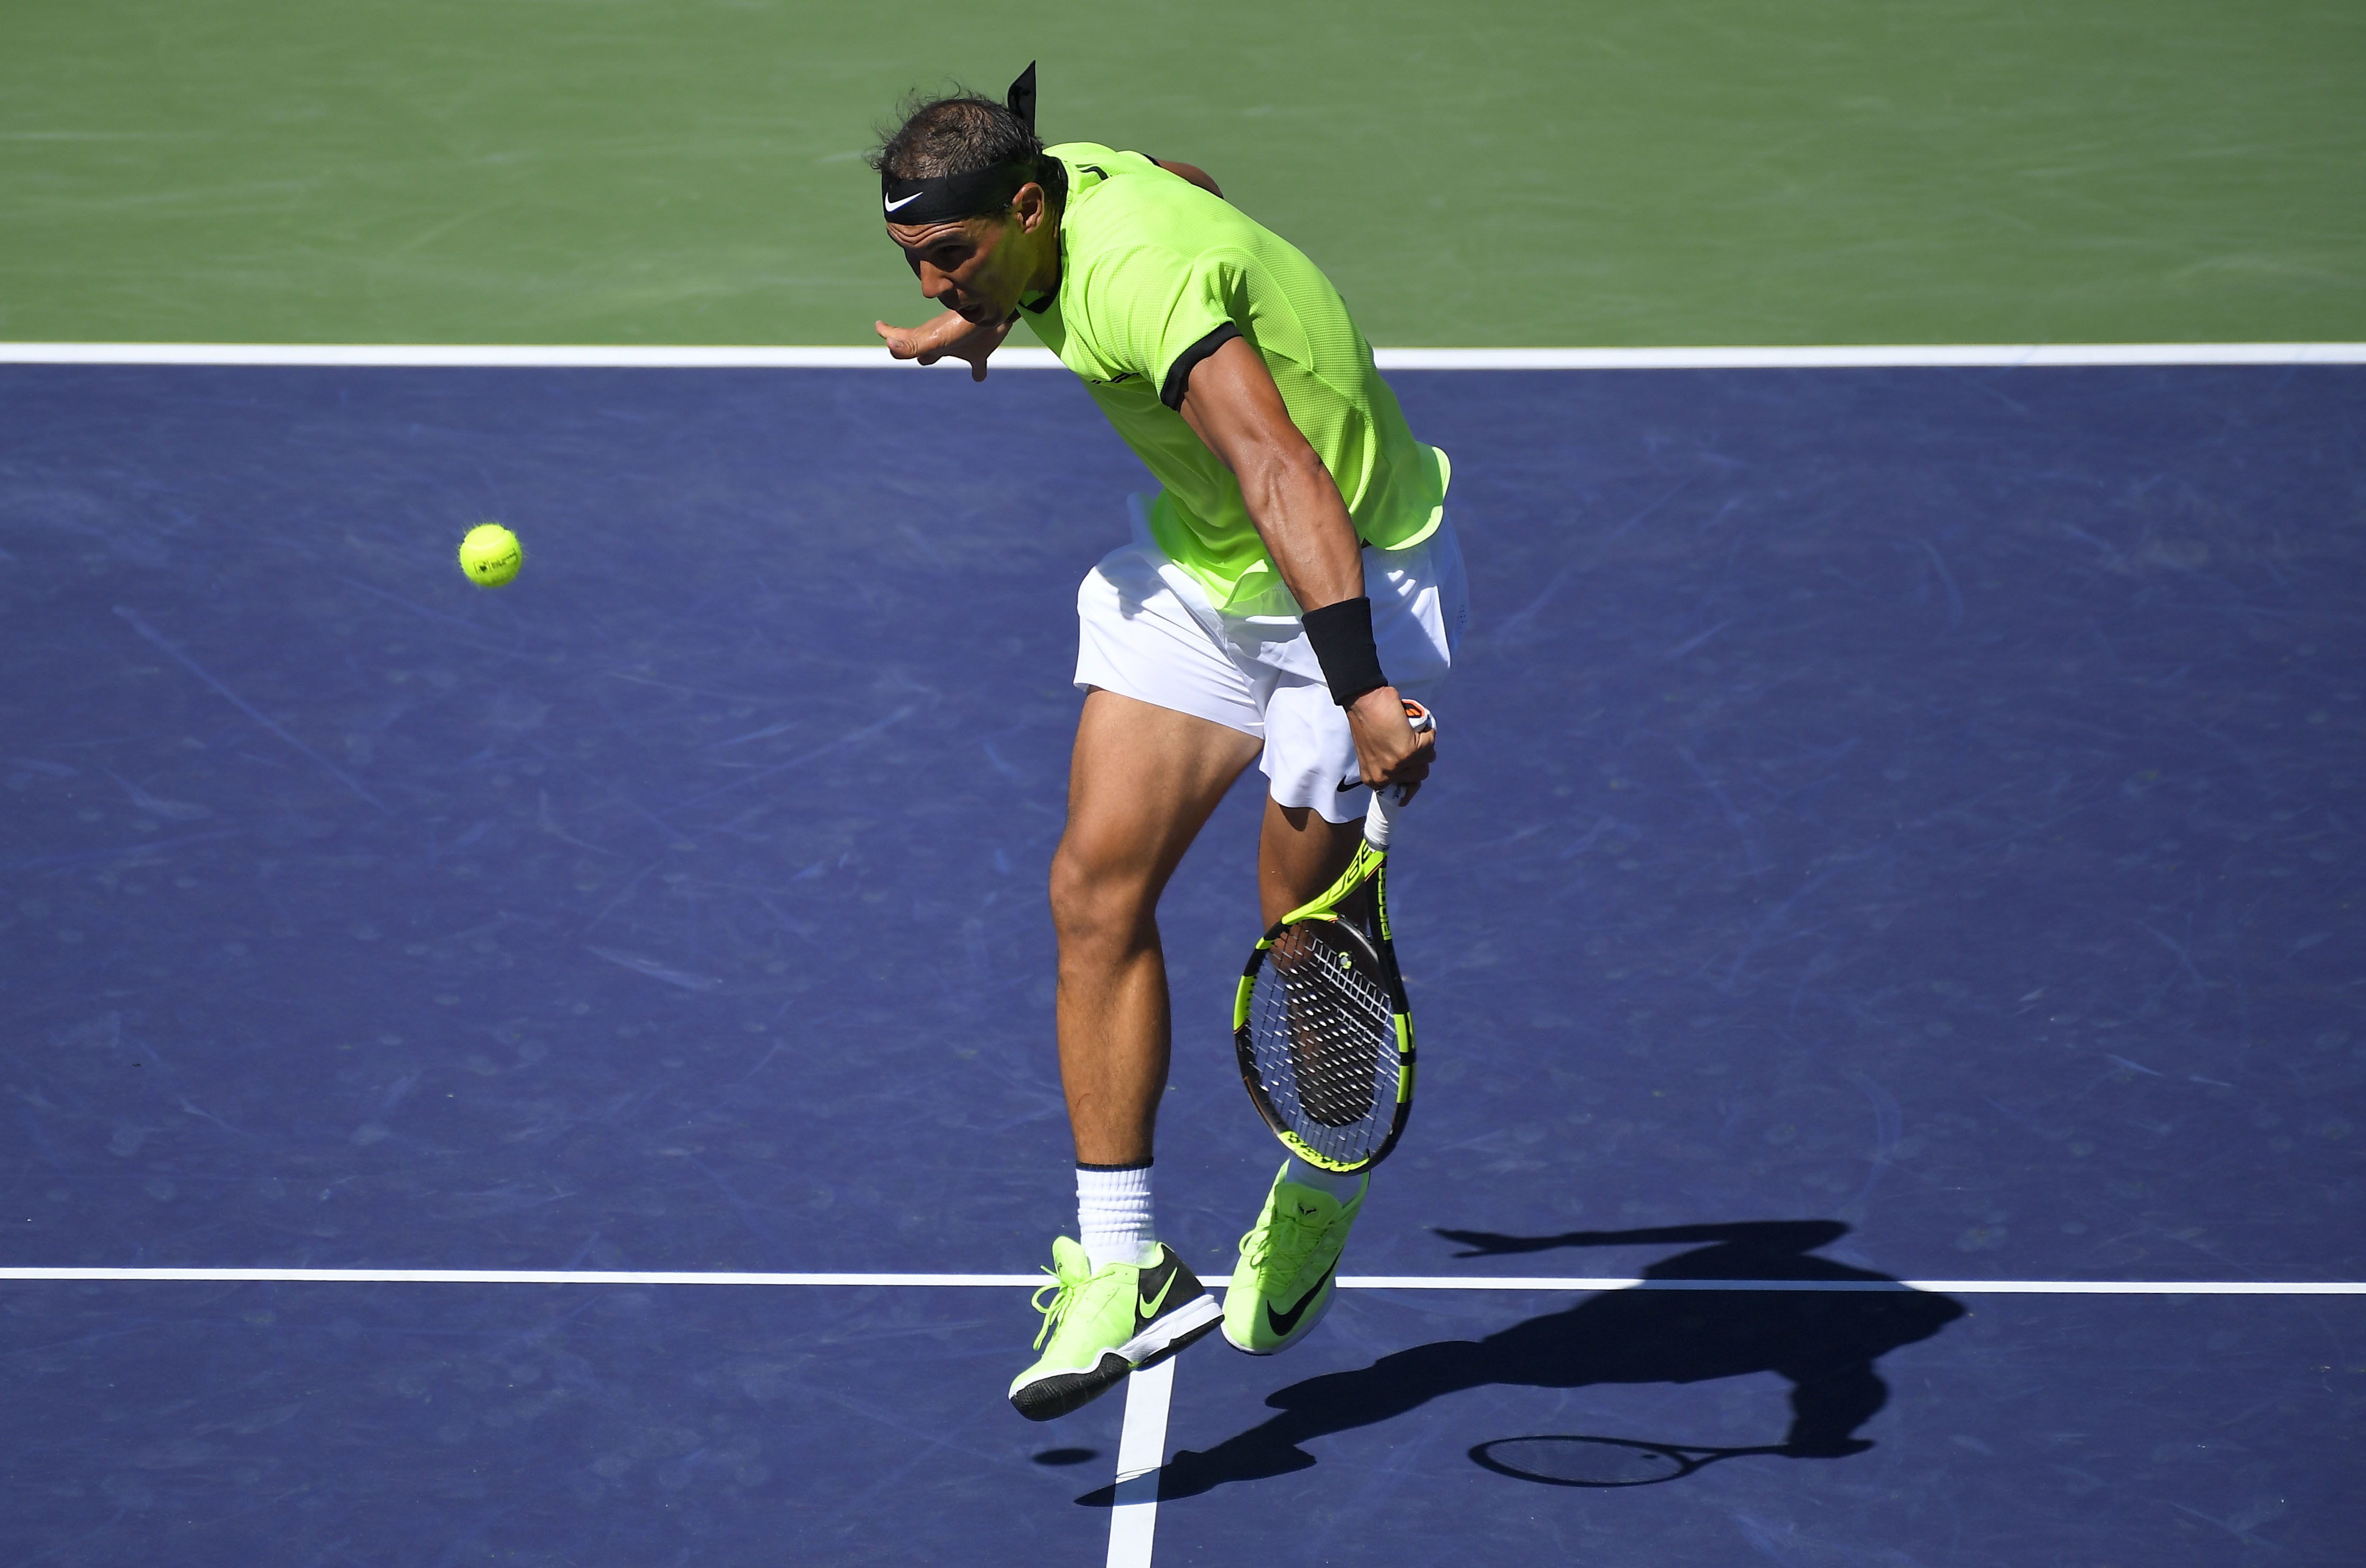 Rafael Nadal eases past Guido Pella at Indian Wells [PHOTOS] – Rafael ...